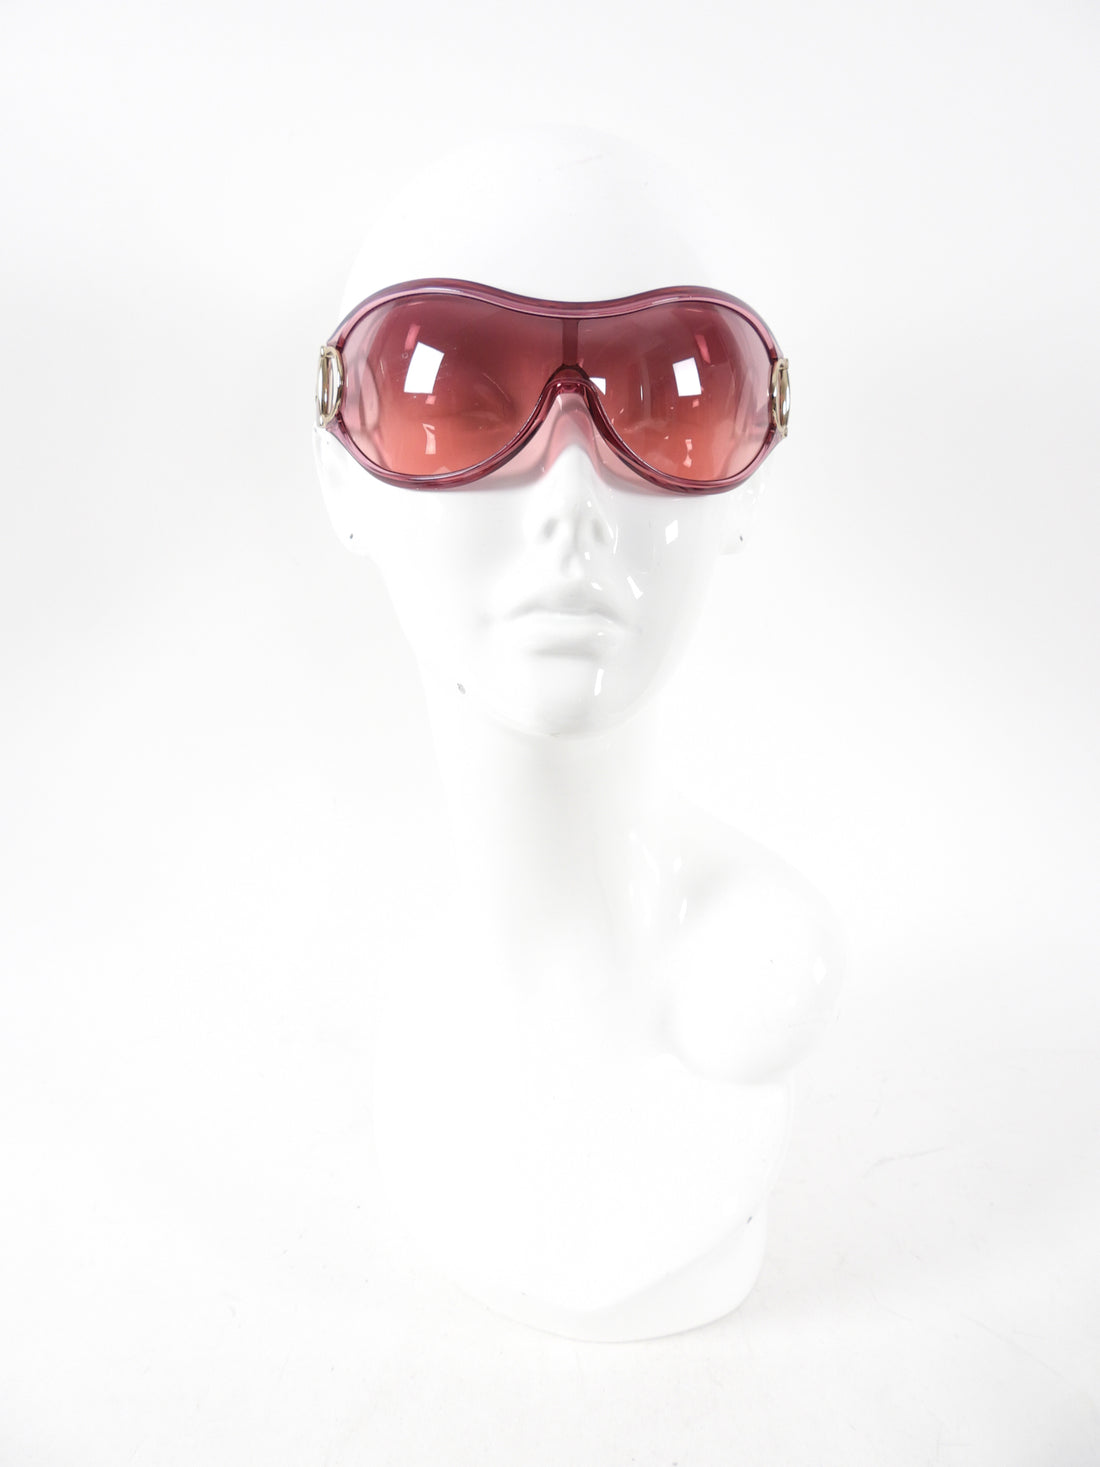 Gucci Pink Horsebit Early 2000's Wrap Shield Sunglasses